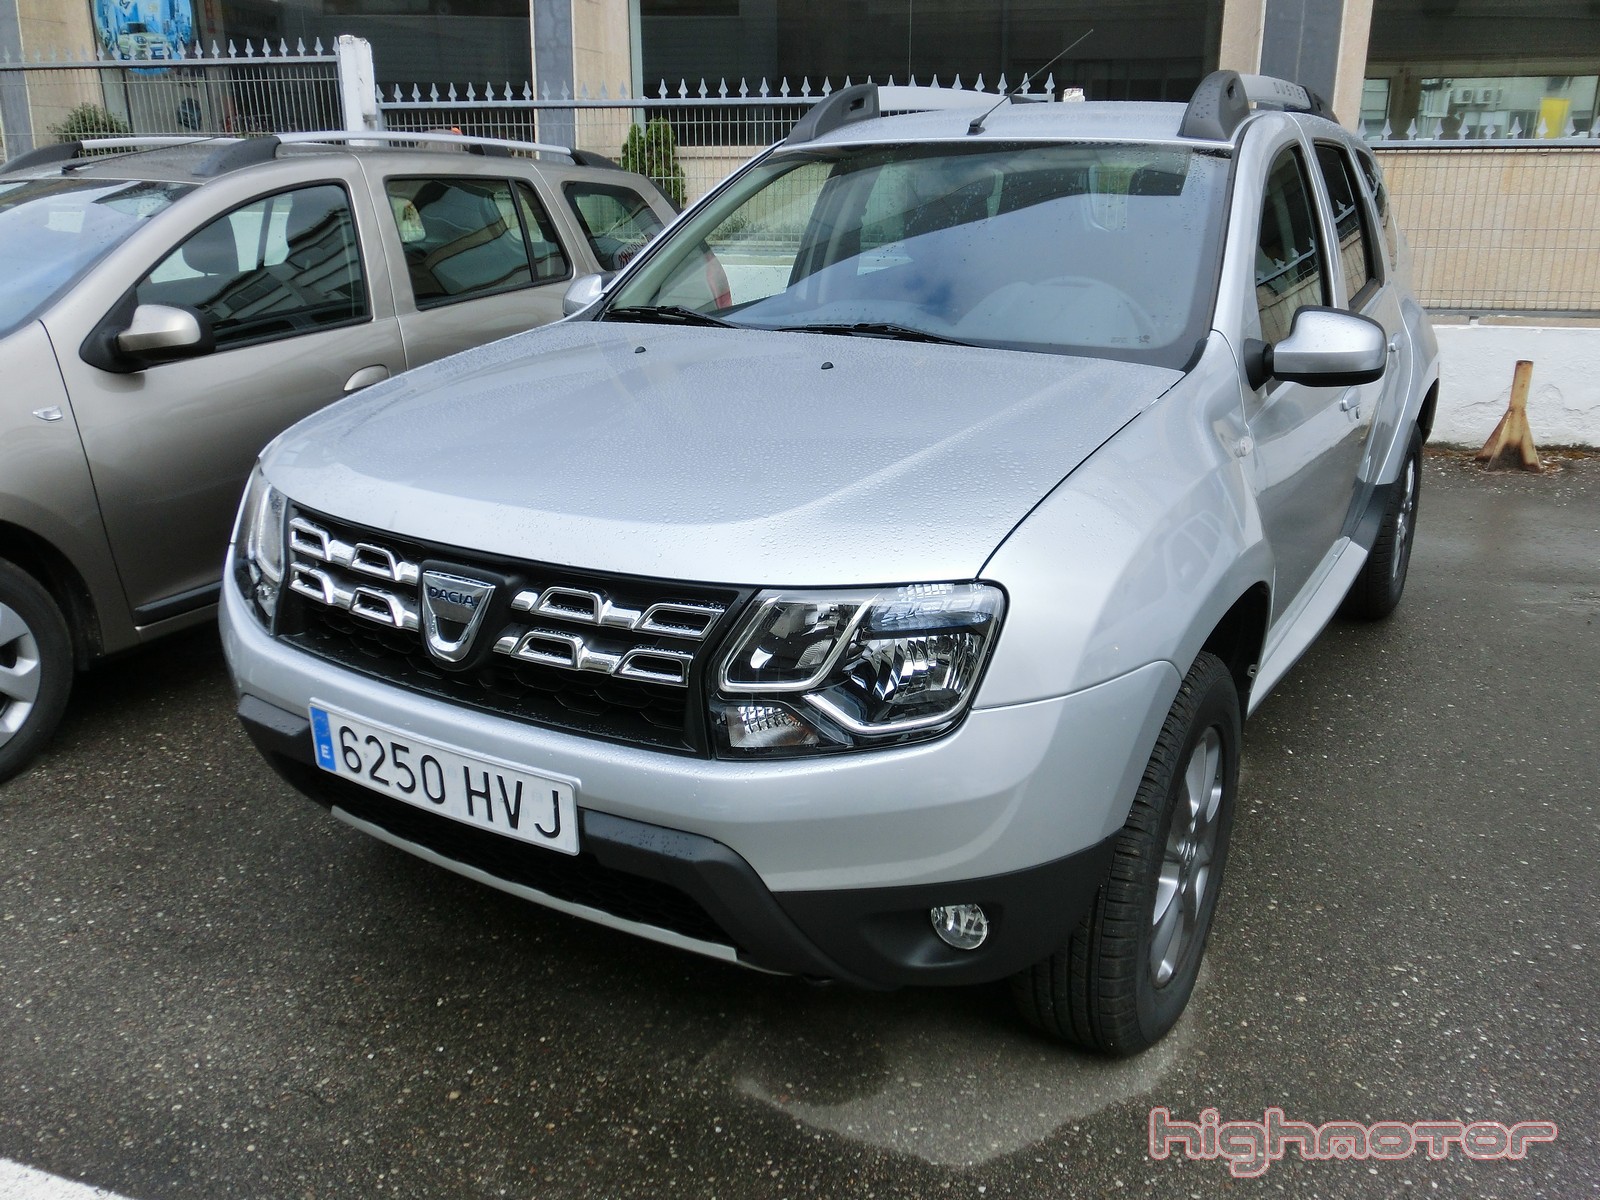 Dacia Tour 2014: Al volante del Dacia Duster 1.2 TCe 125 CV y Dacia Logan MCV